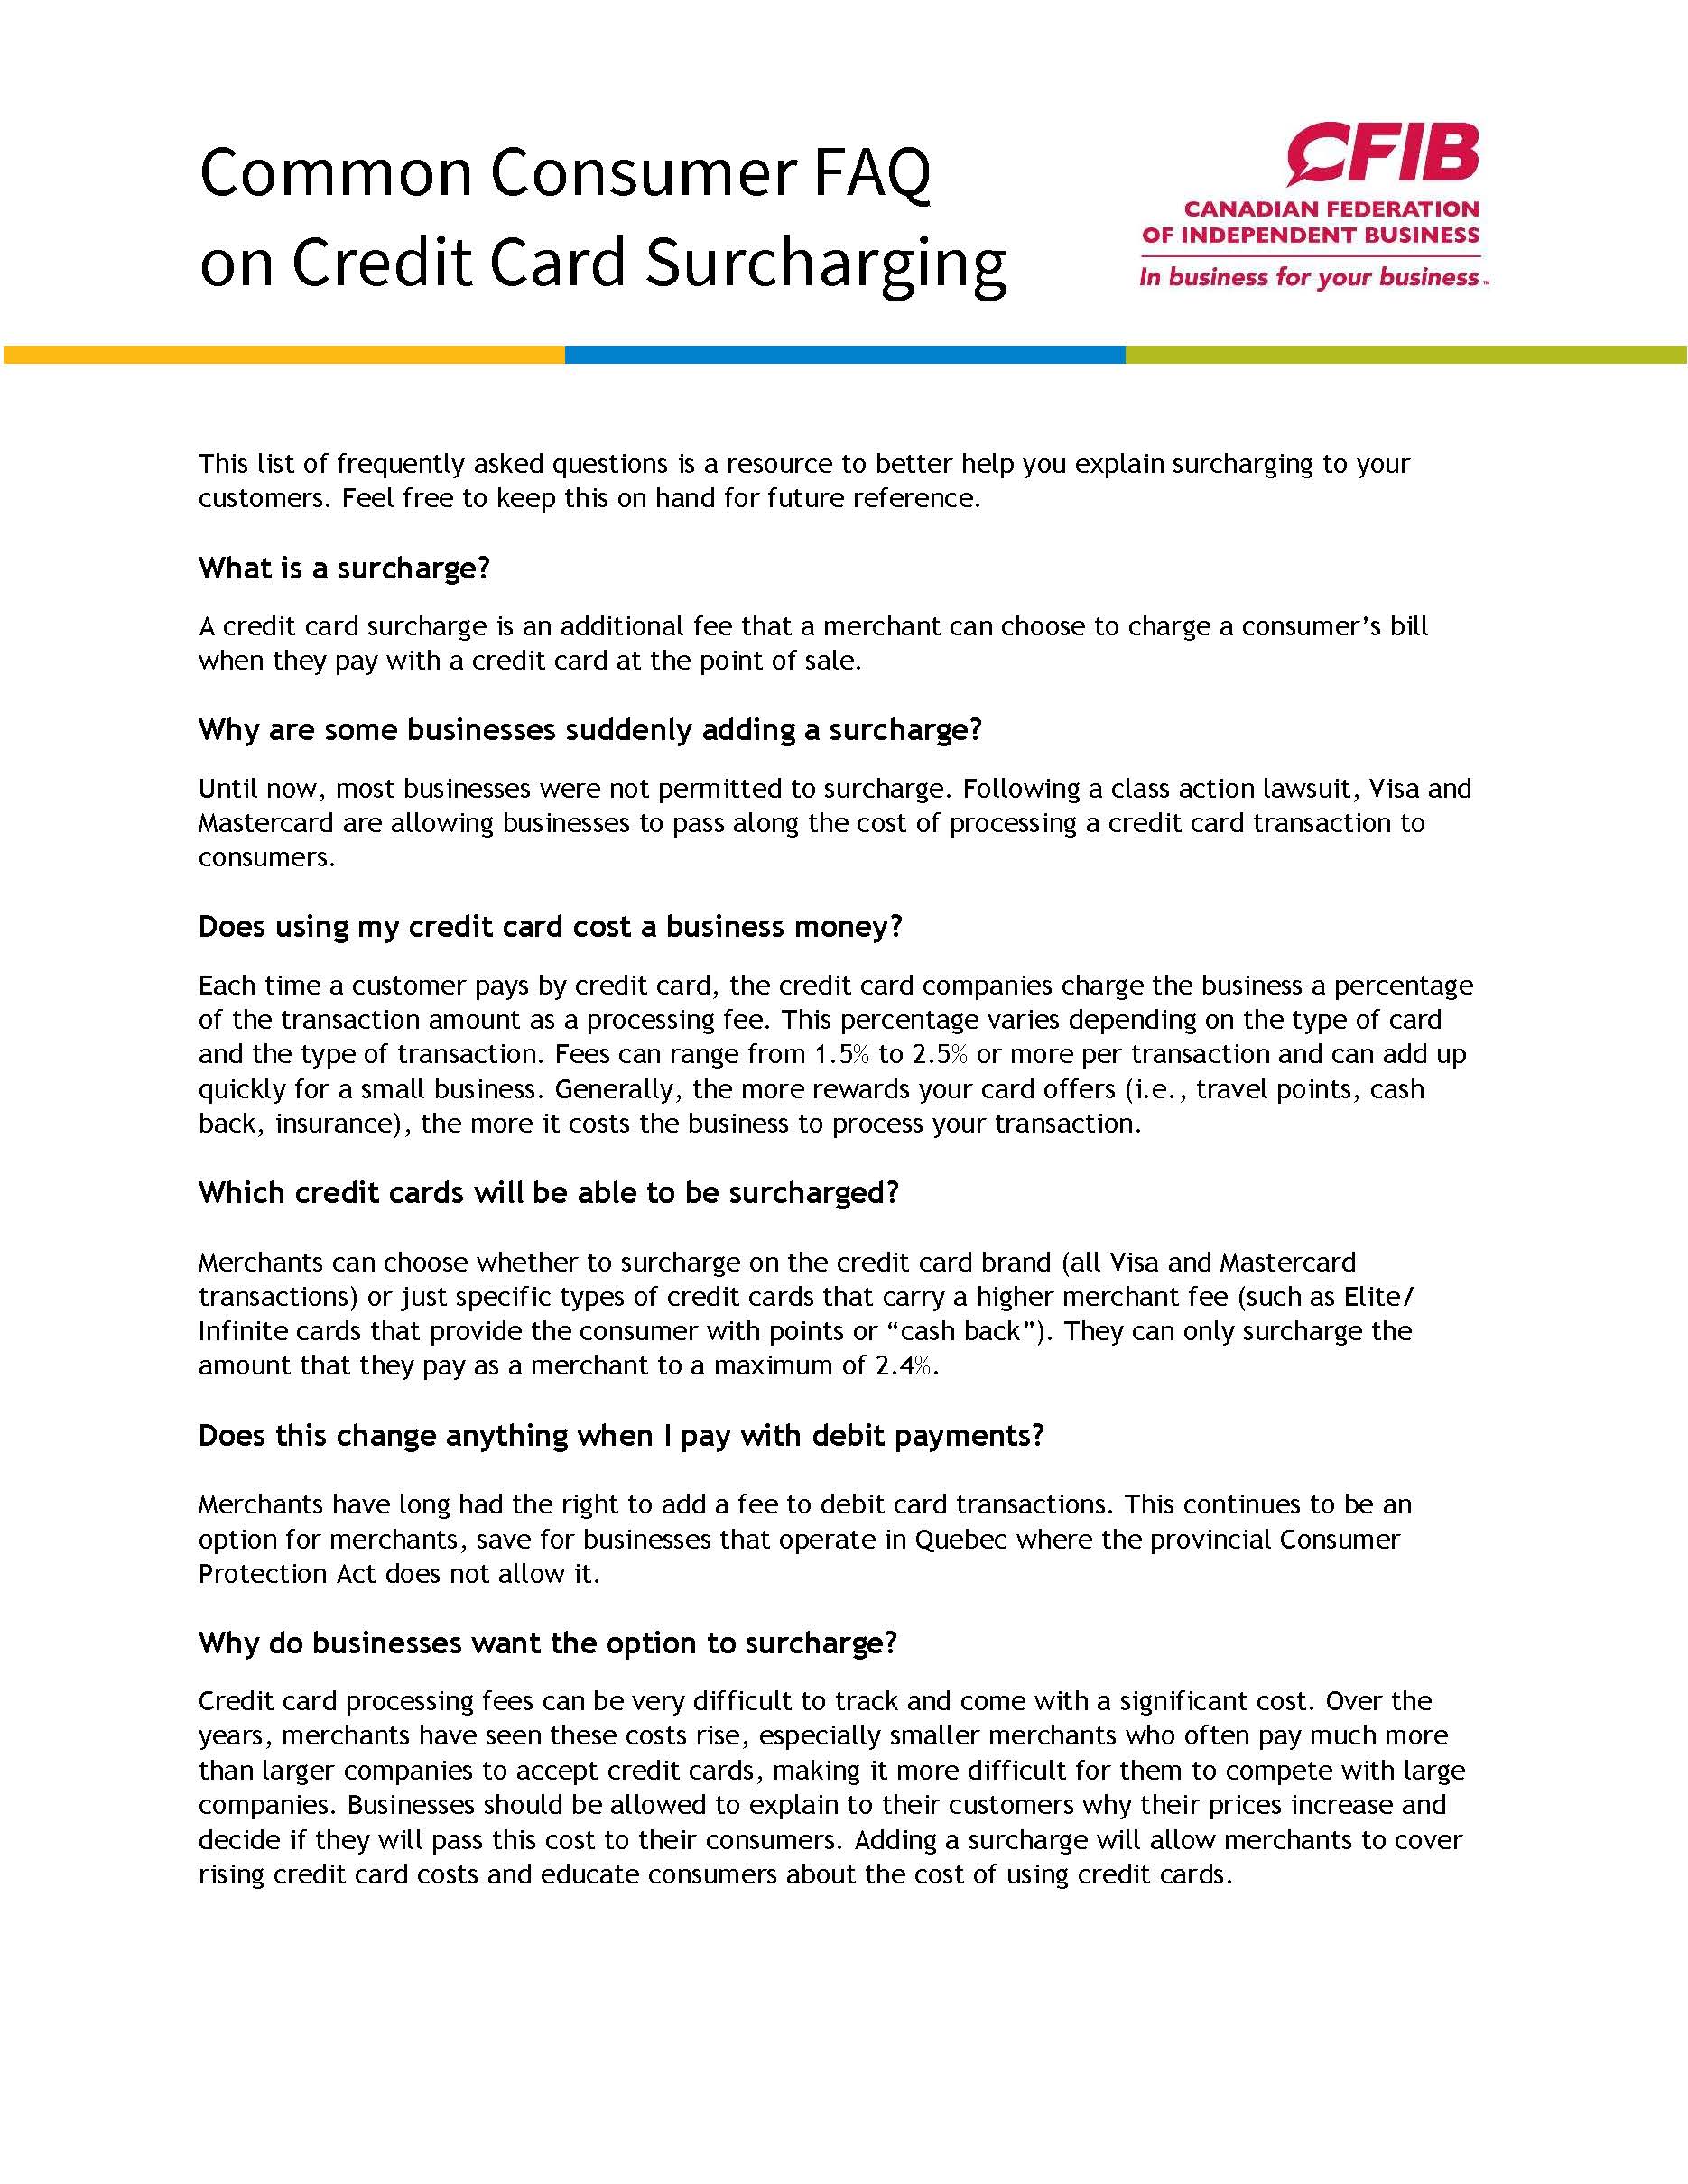 Consumer_FAQ_on_CC_Surcharging